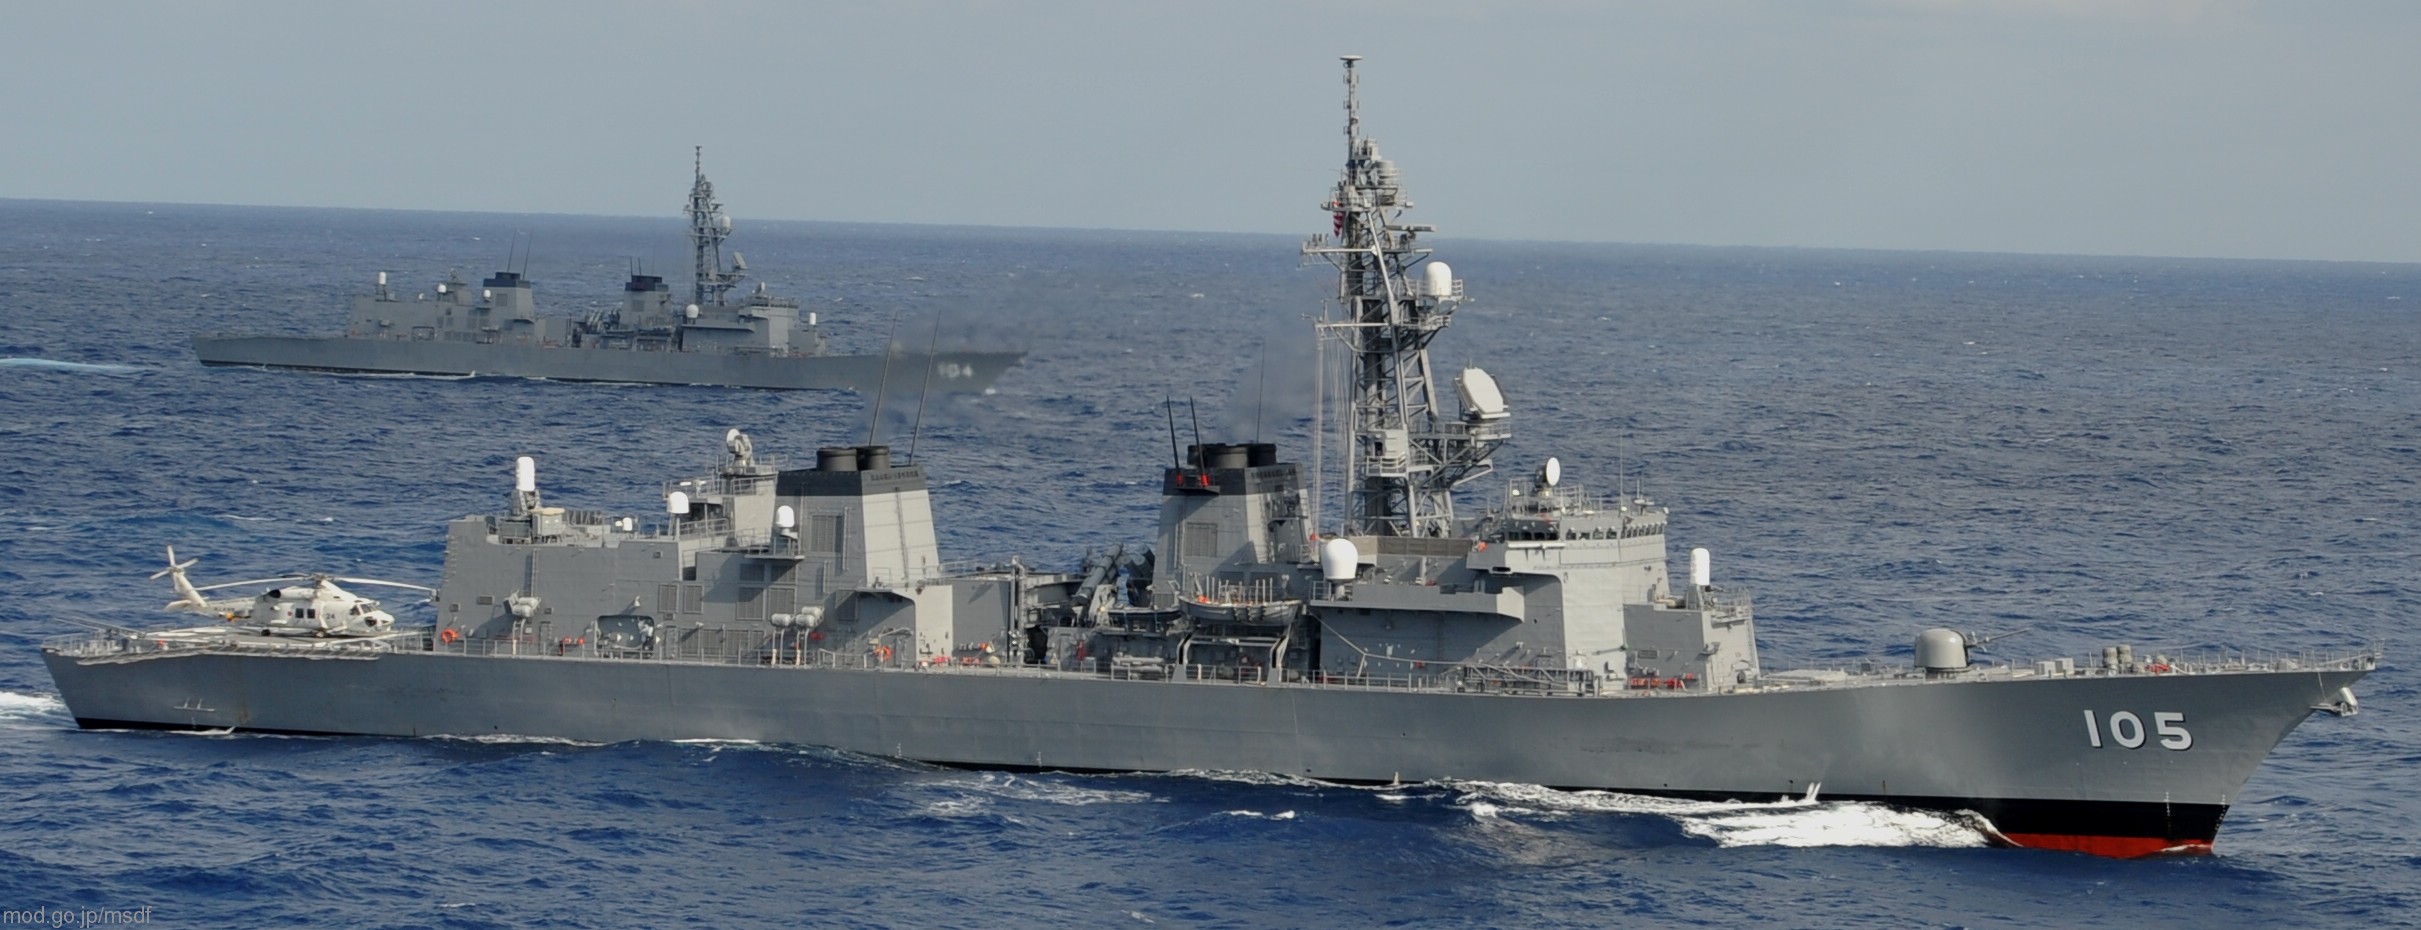 dd-105 js inazuma murasame class destroyer japan maritime self defense force jmsdf 14